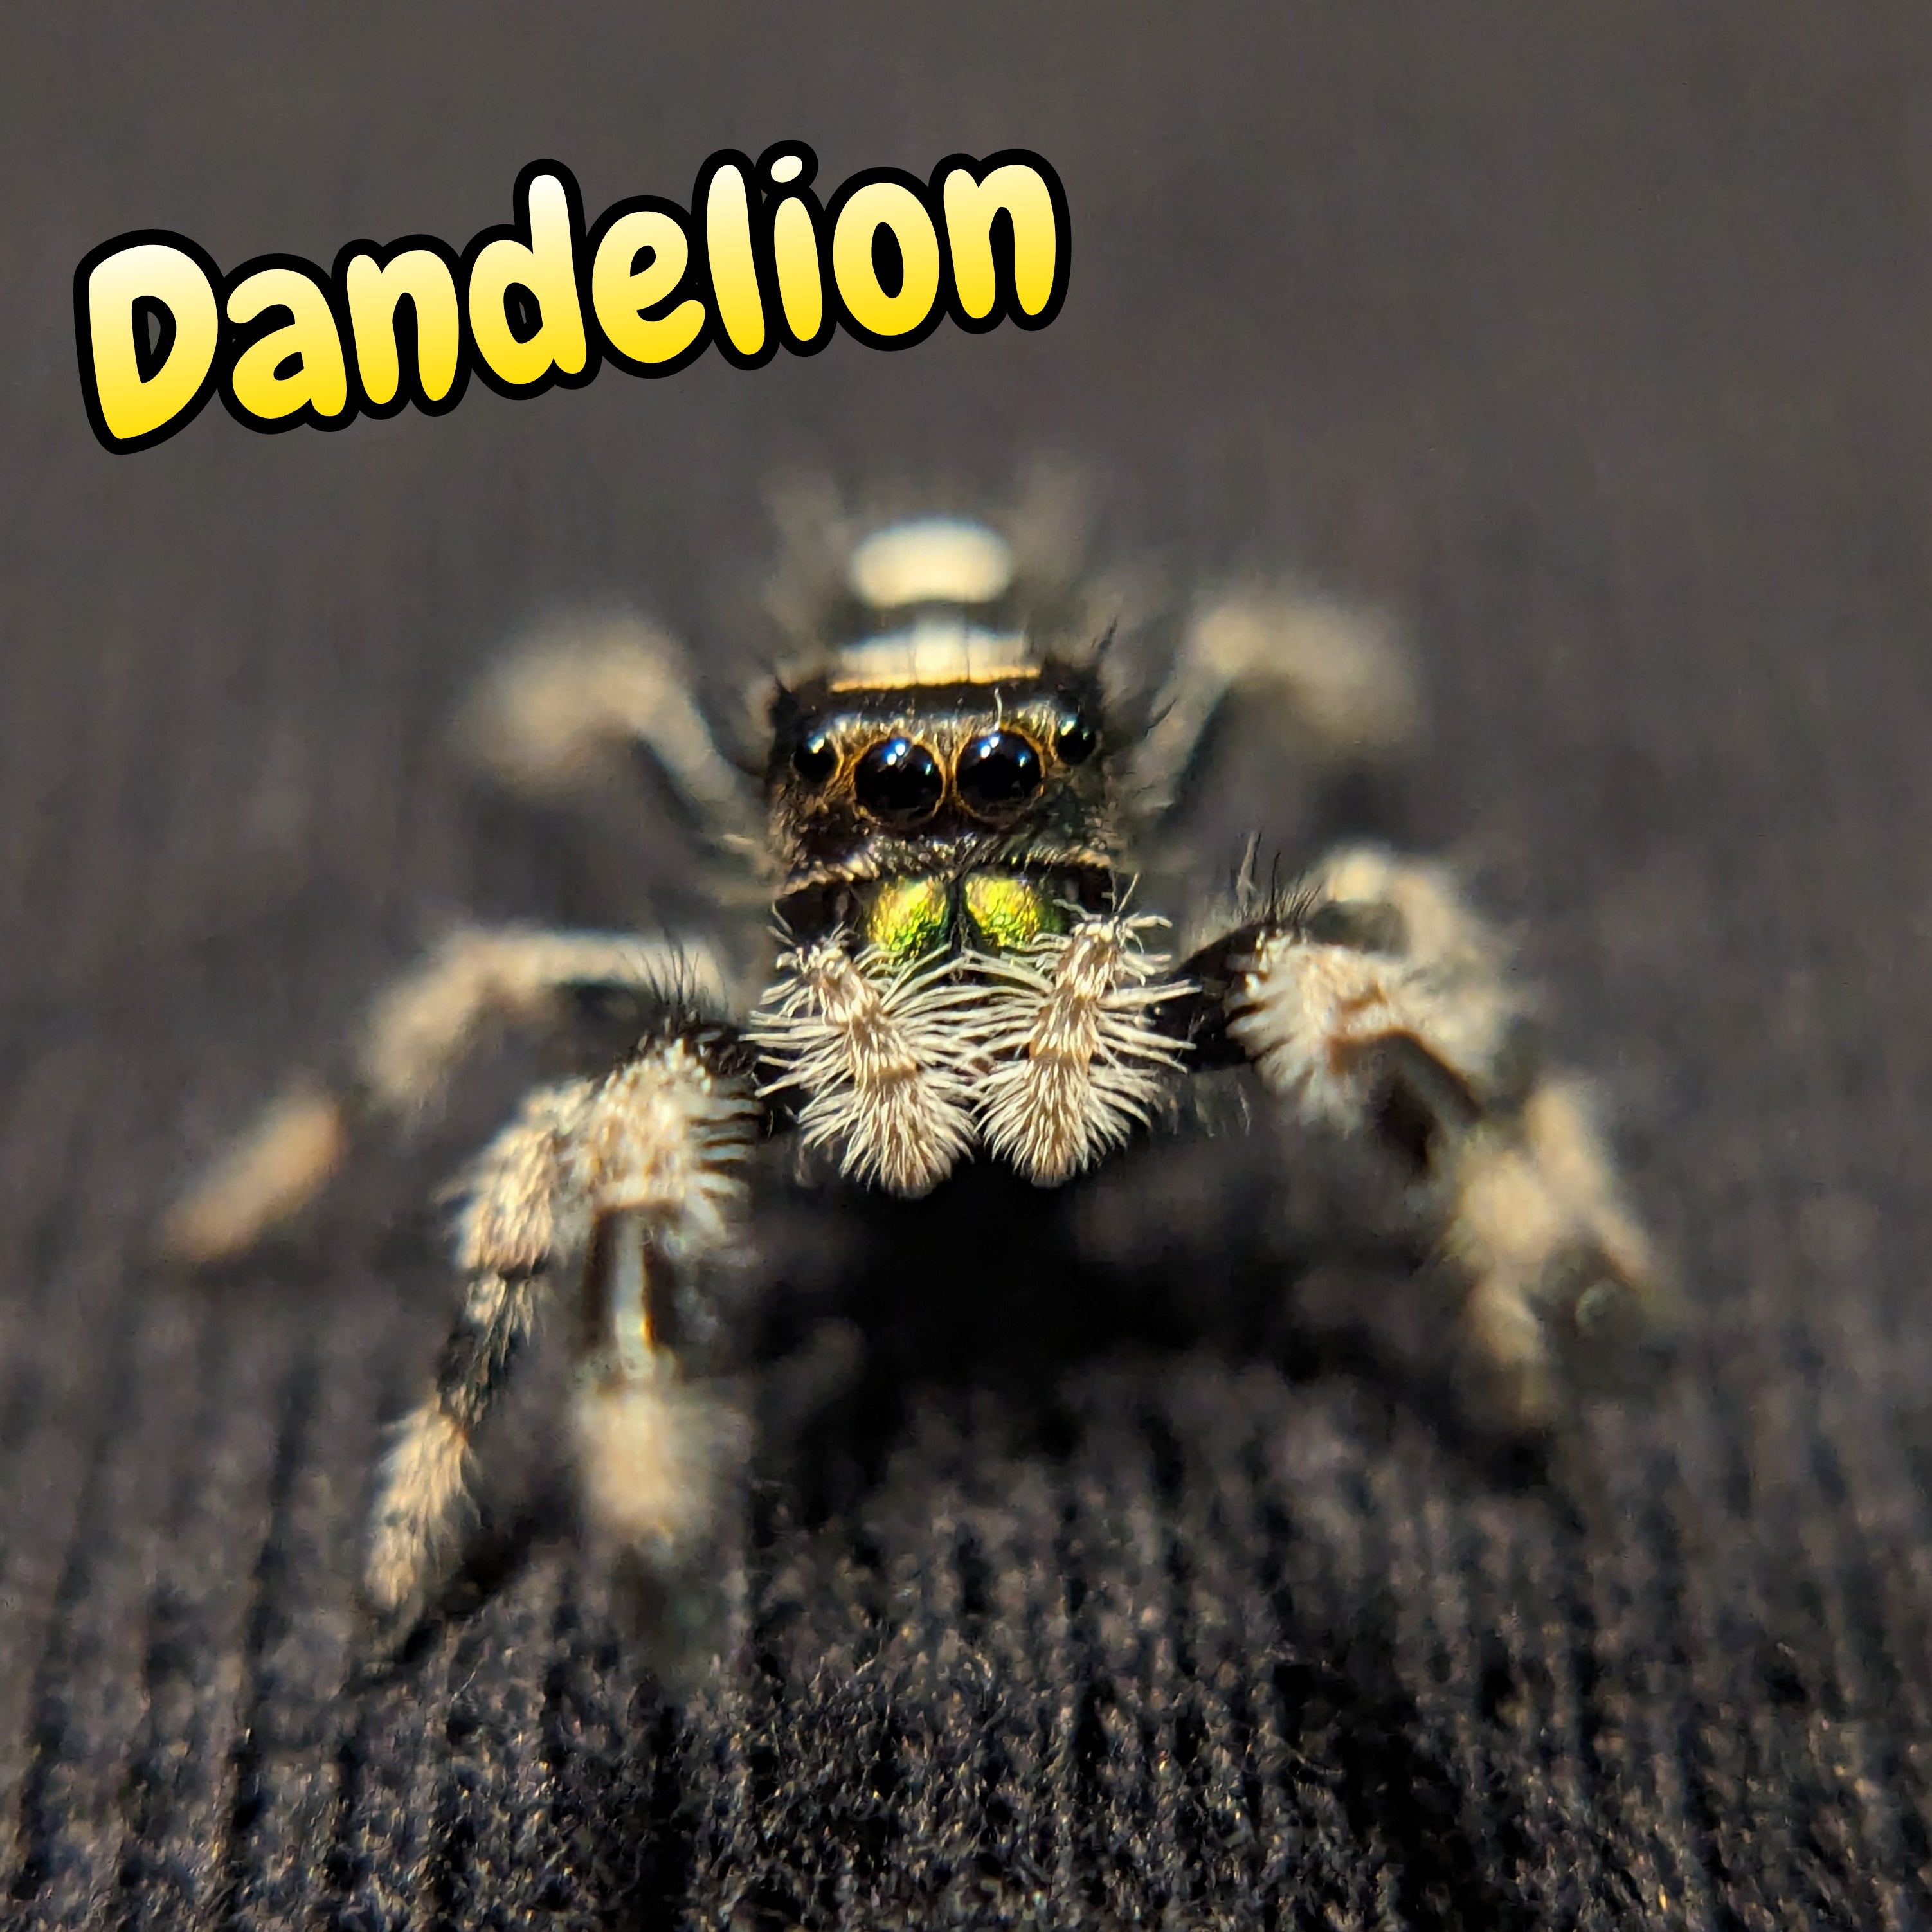 Apalachicola Regal Jumping Spider "Dandelion"